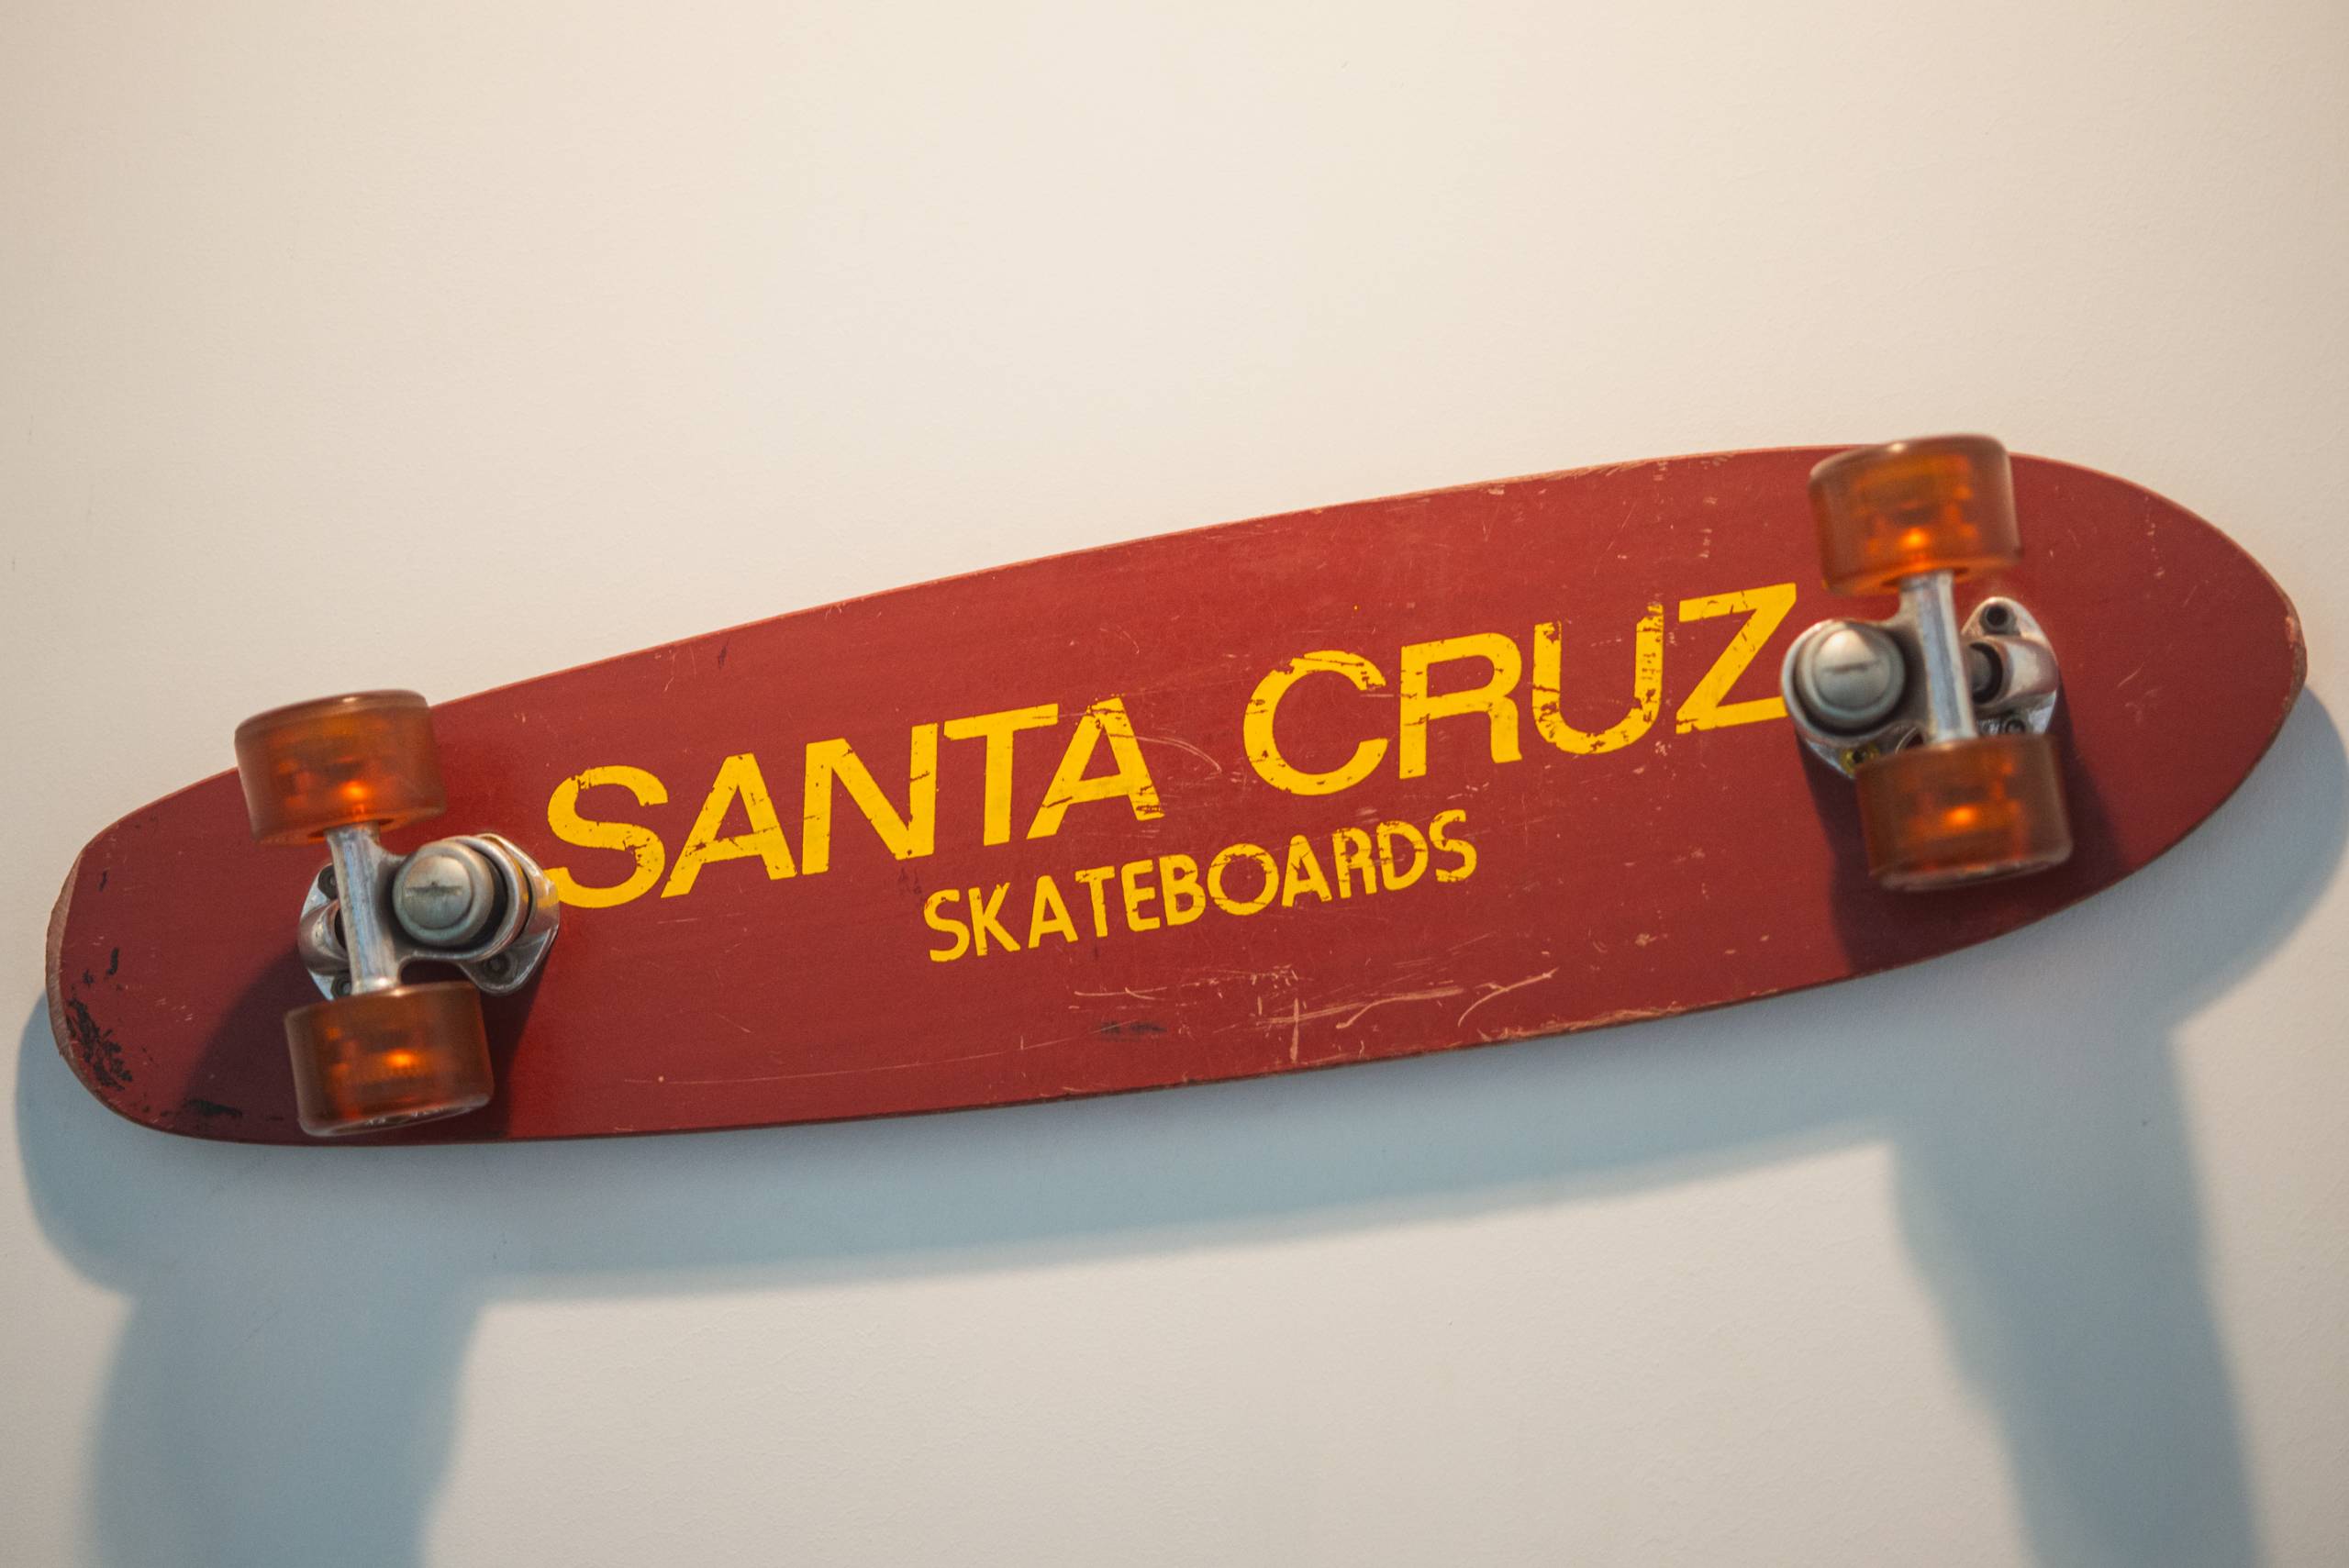 The bottom of a skateboard hanging on a wall reads "Santa Cruz Skateboards."